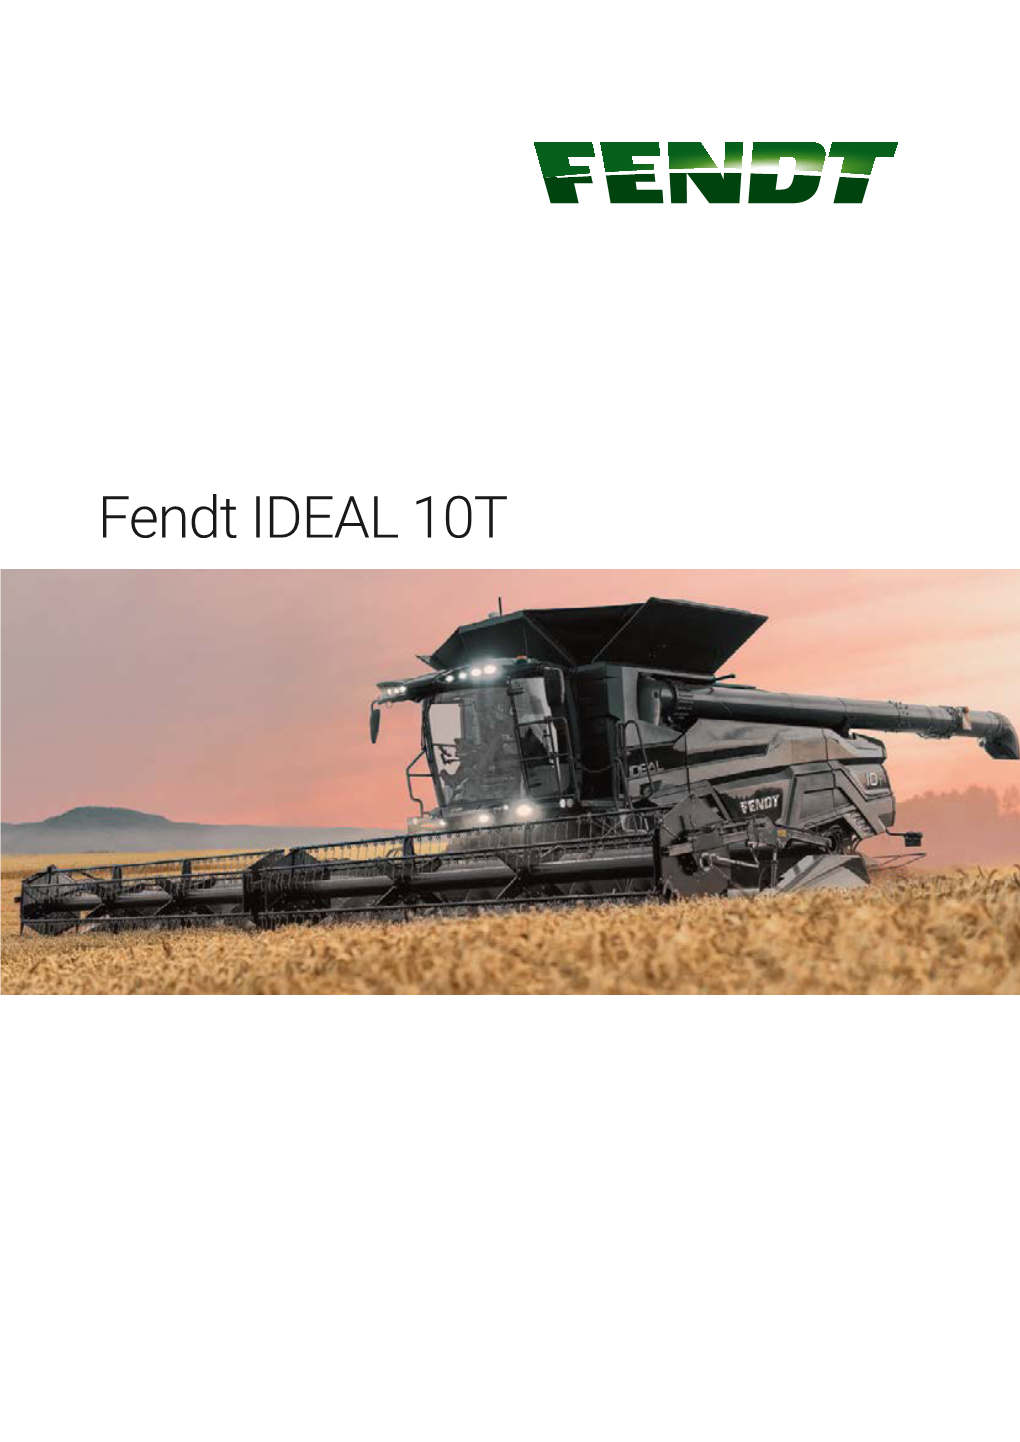 Fendt IDEAL 10T More Power, More Output, Less Effort